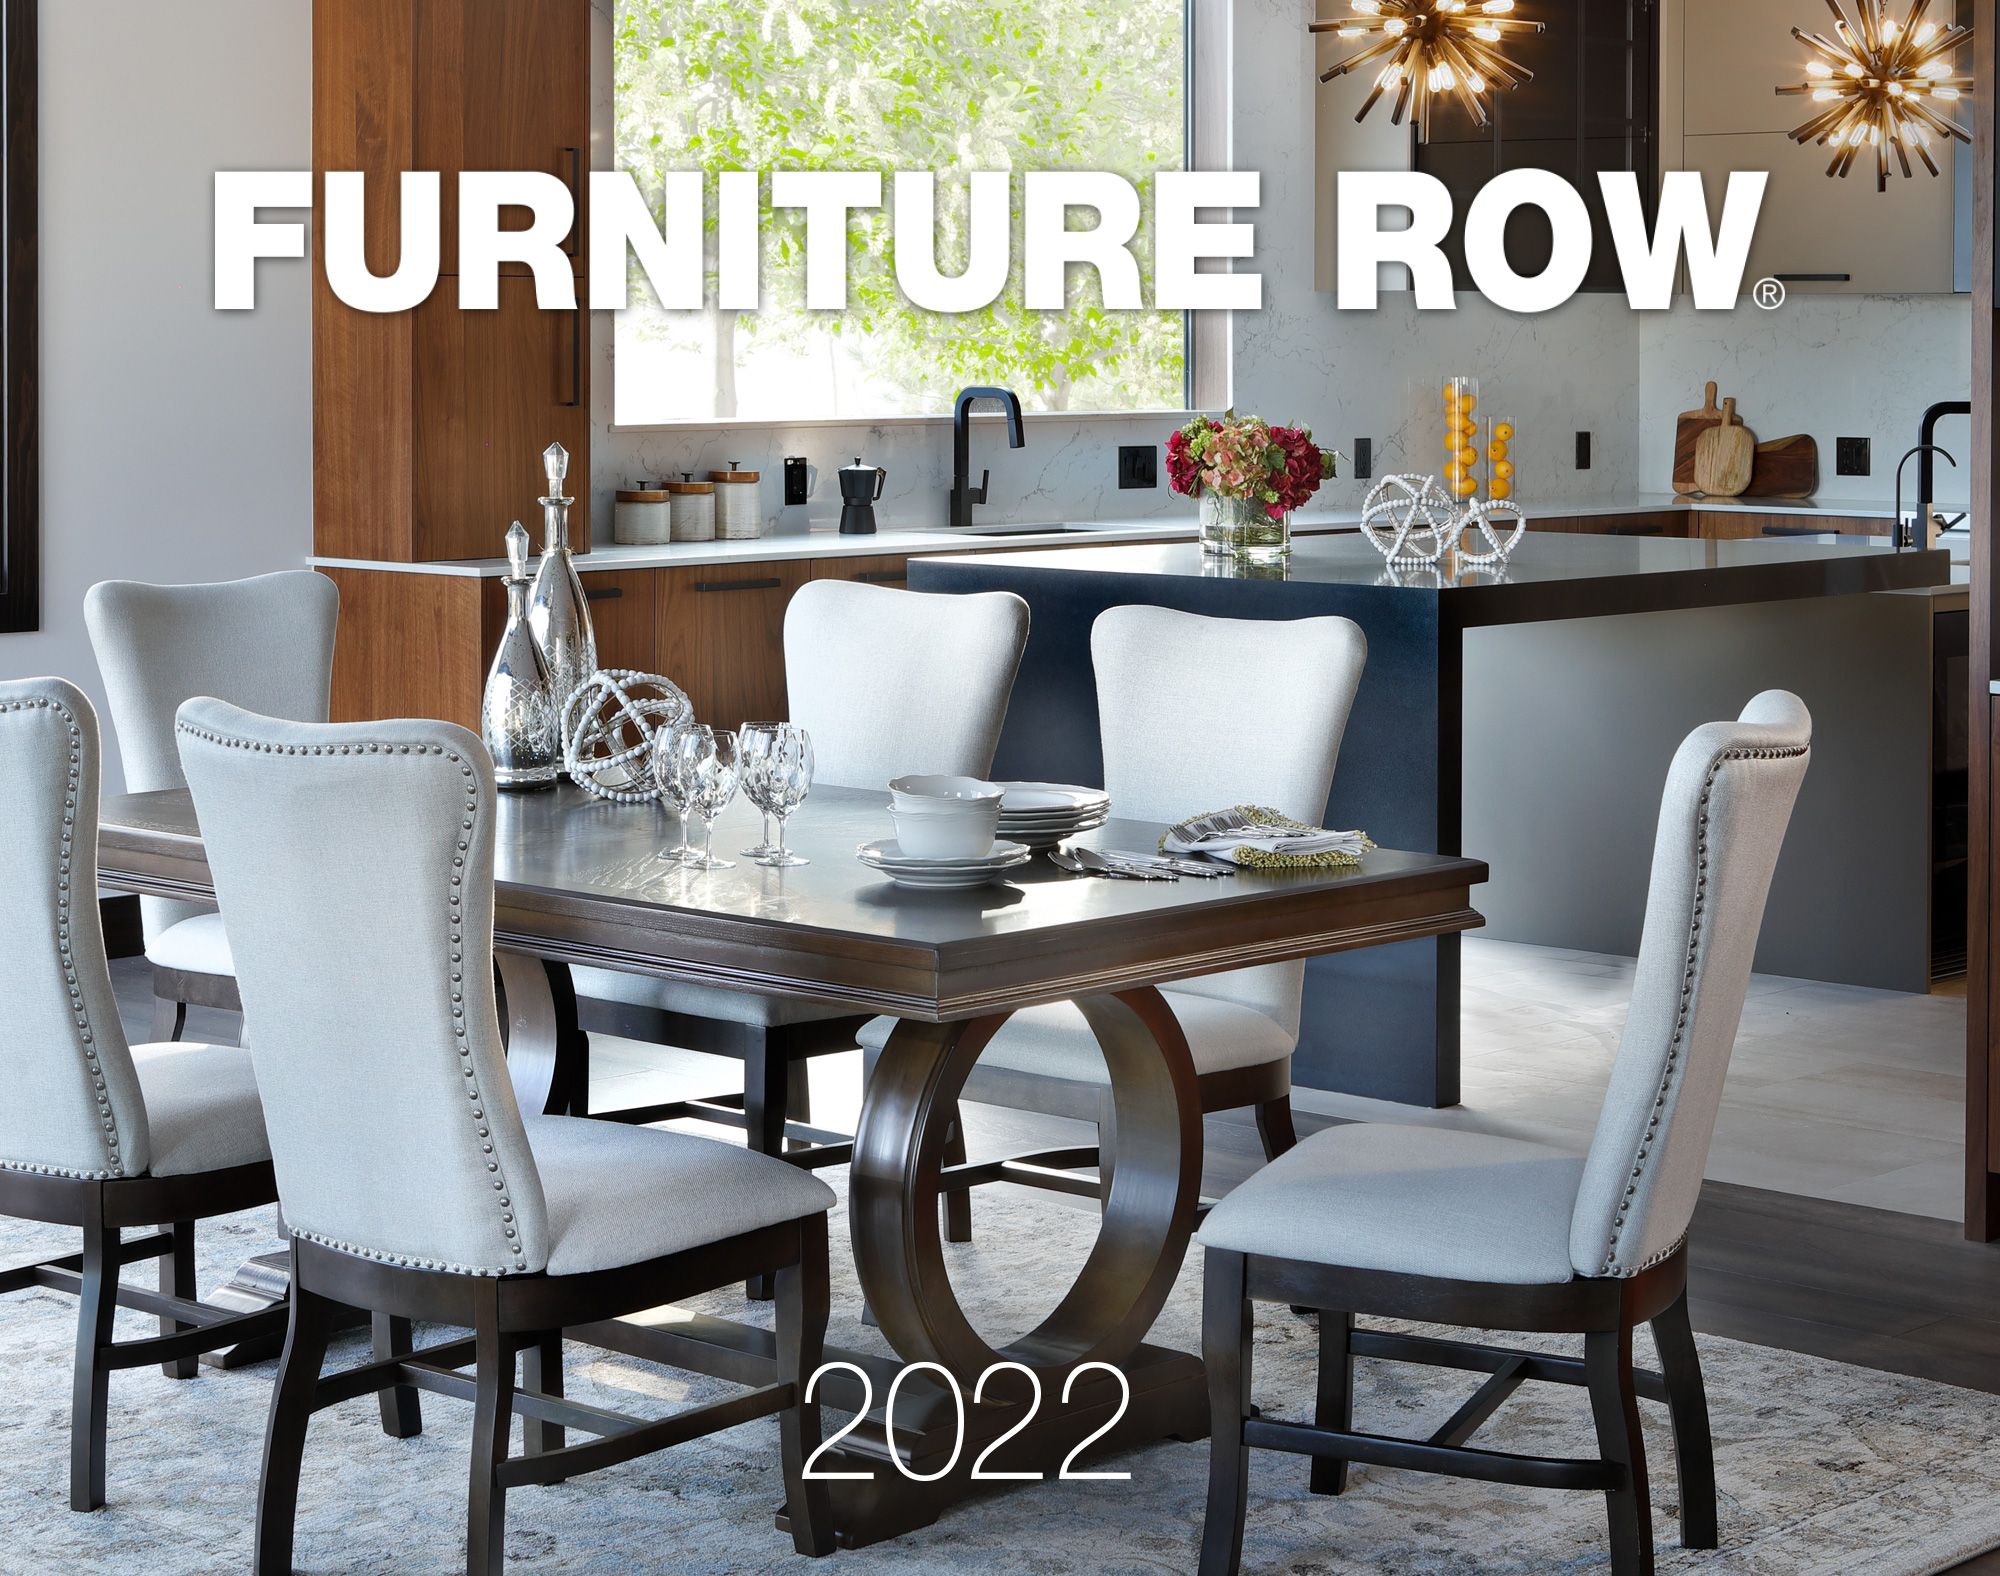 Furniture Row Annual Catalog 2022 Cover